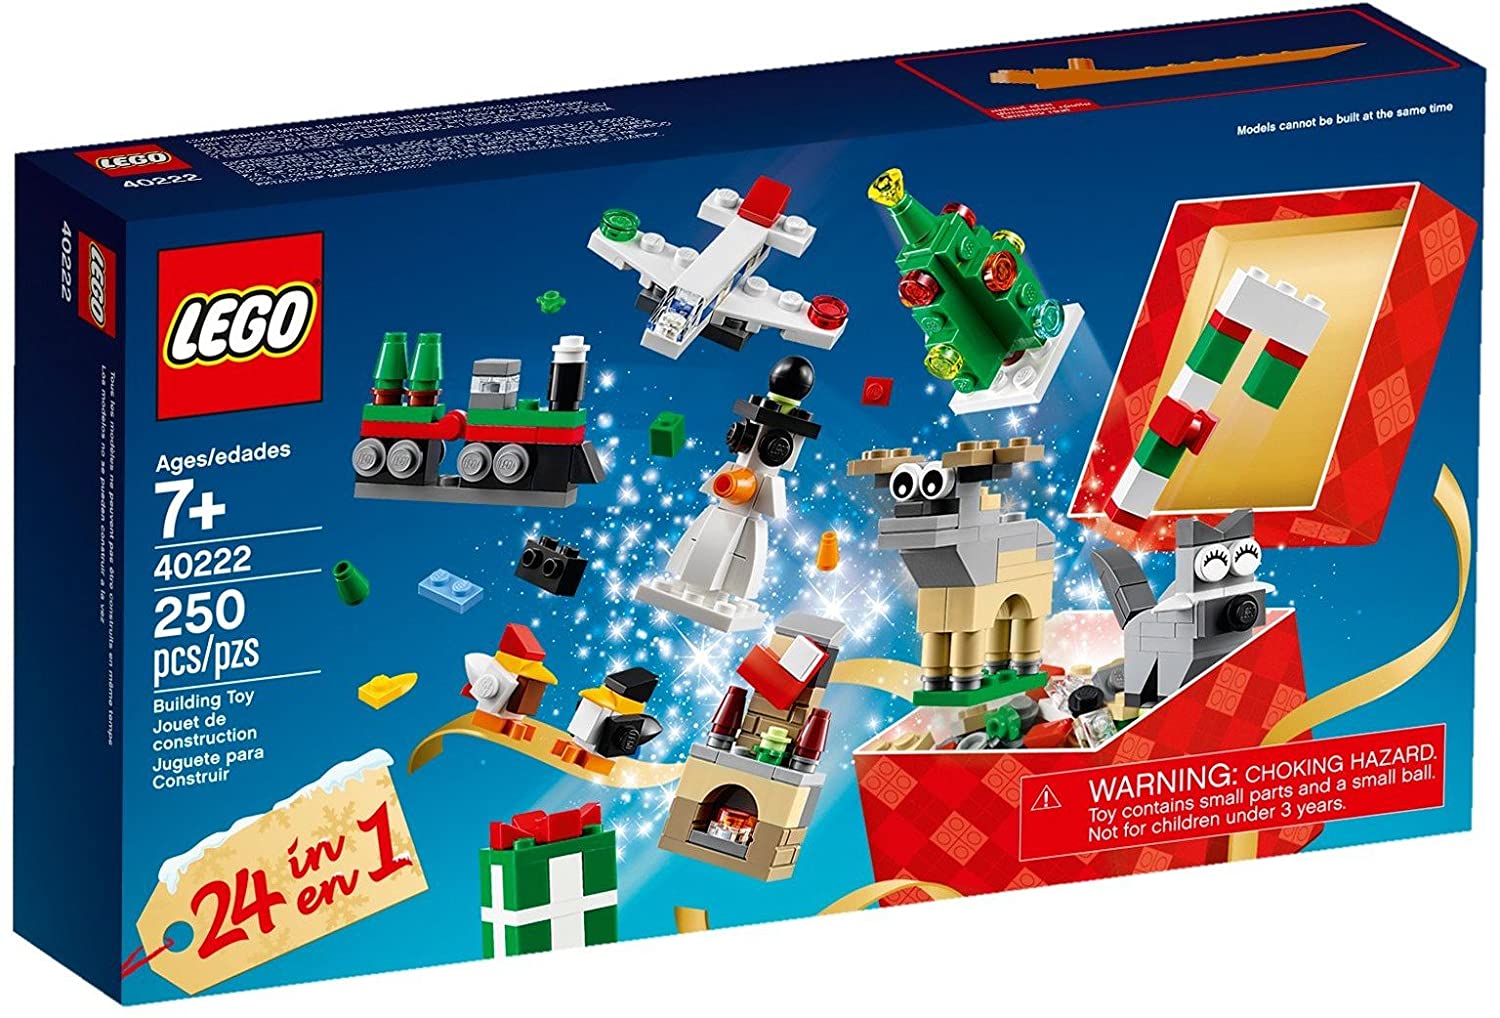 Slika za LEGO 40222 Adventskalender Bauspaß